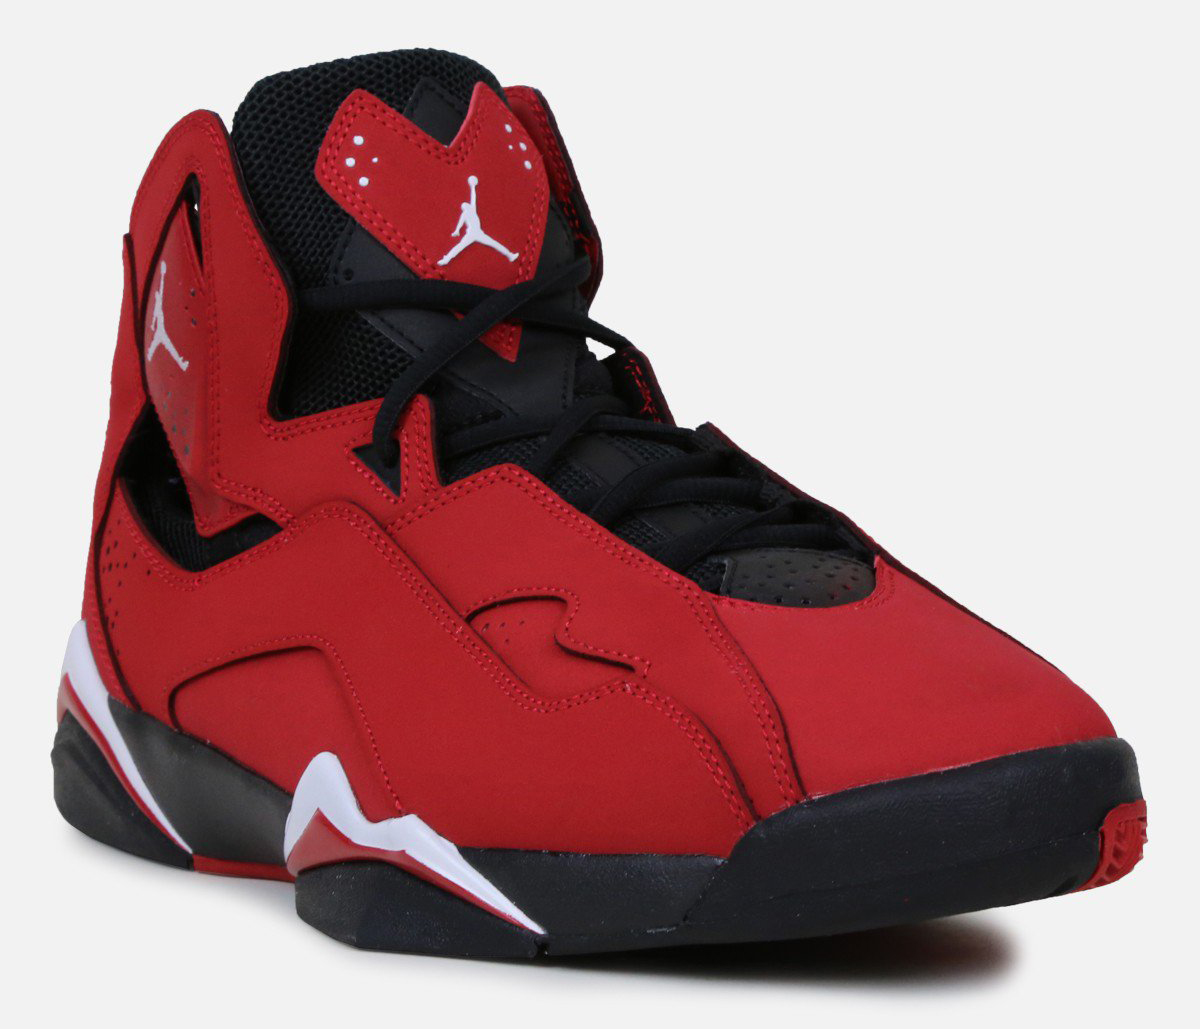 Jordan True Flight "Gym Red" - Air Jordans, Release Dates & More